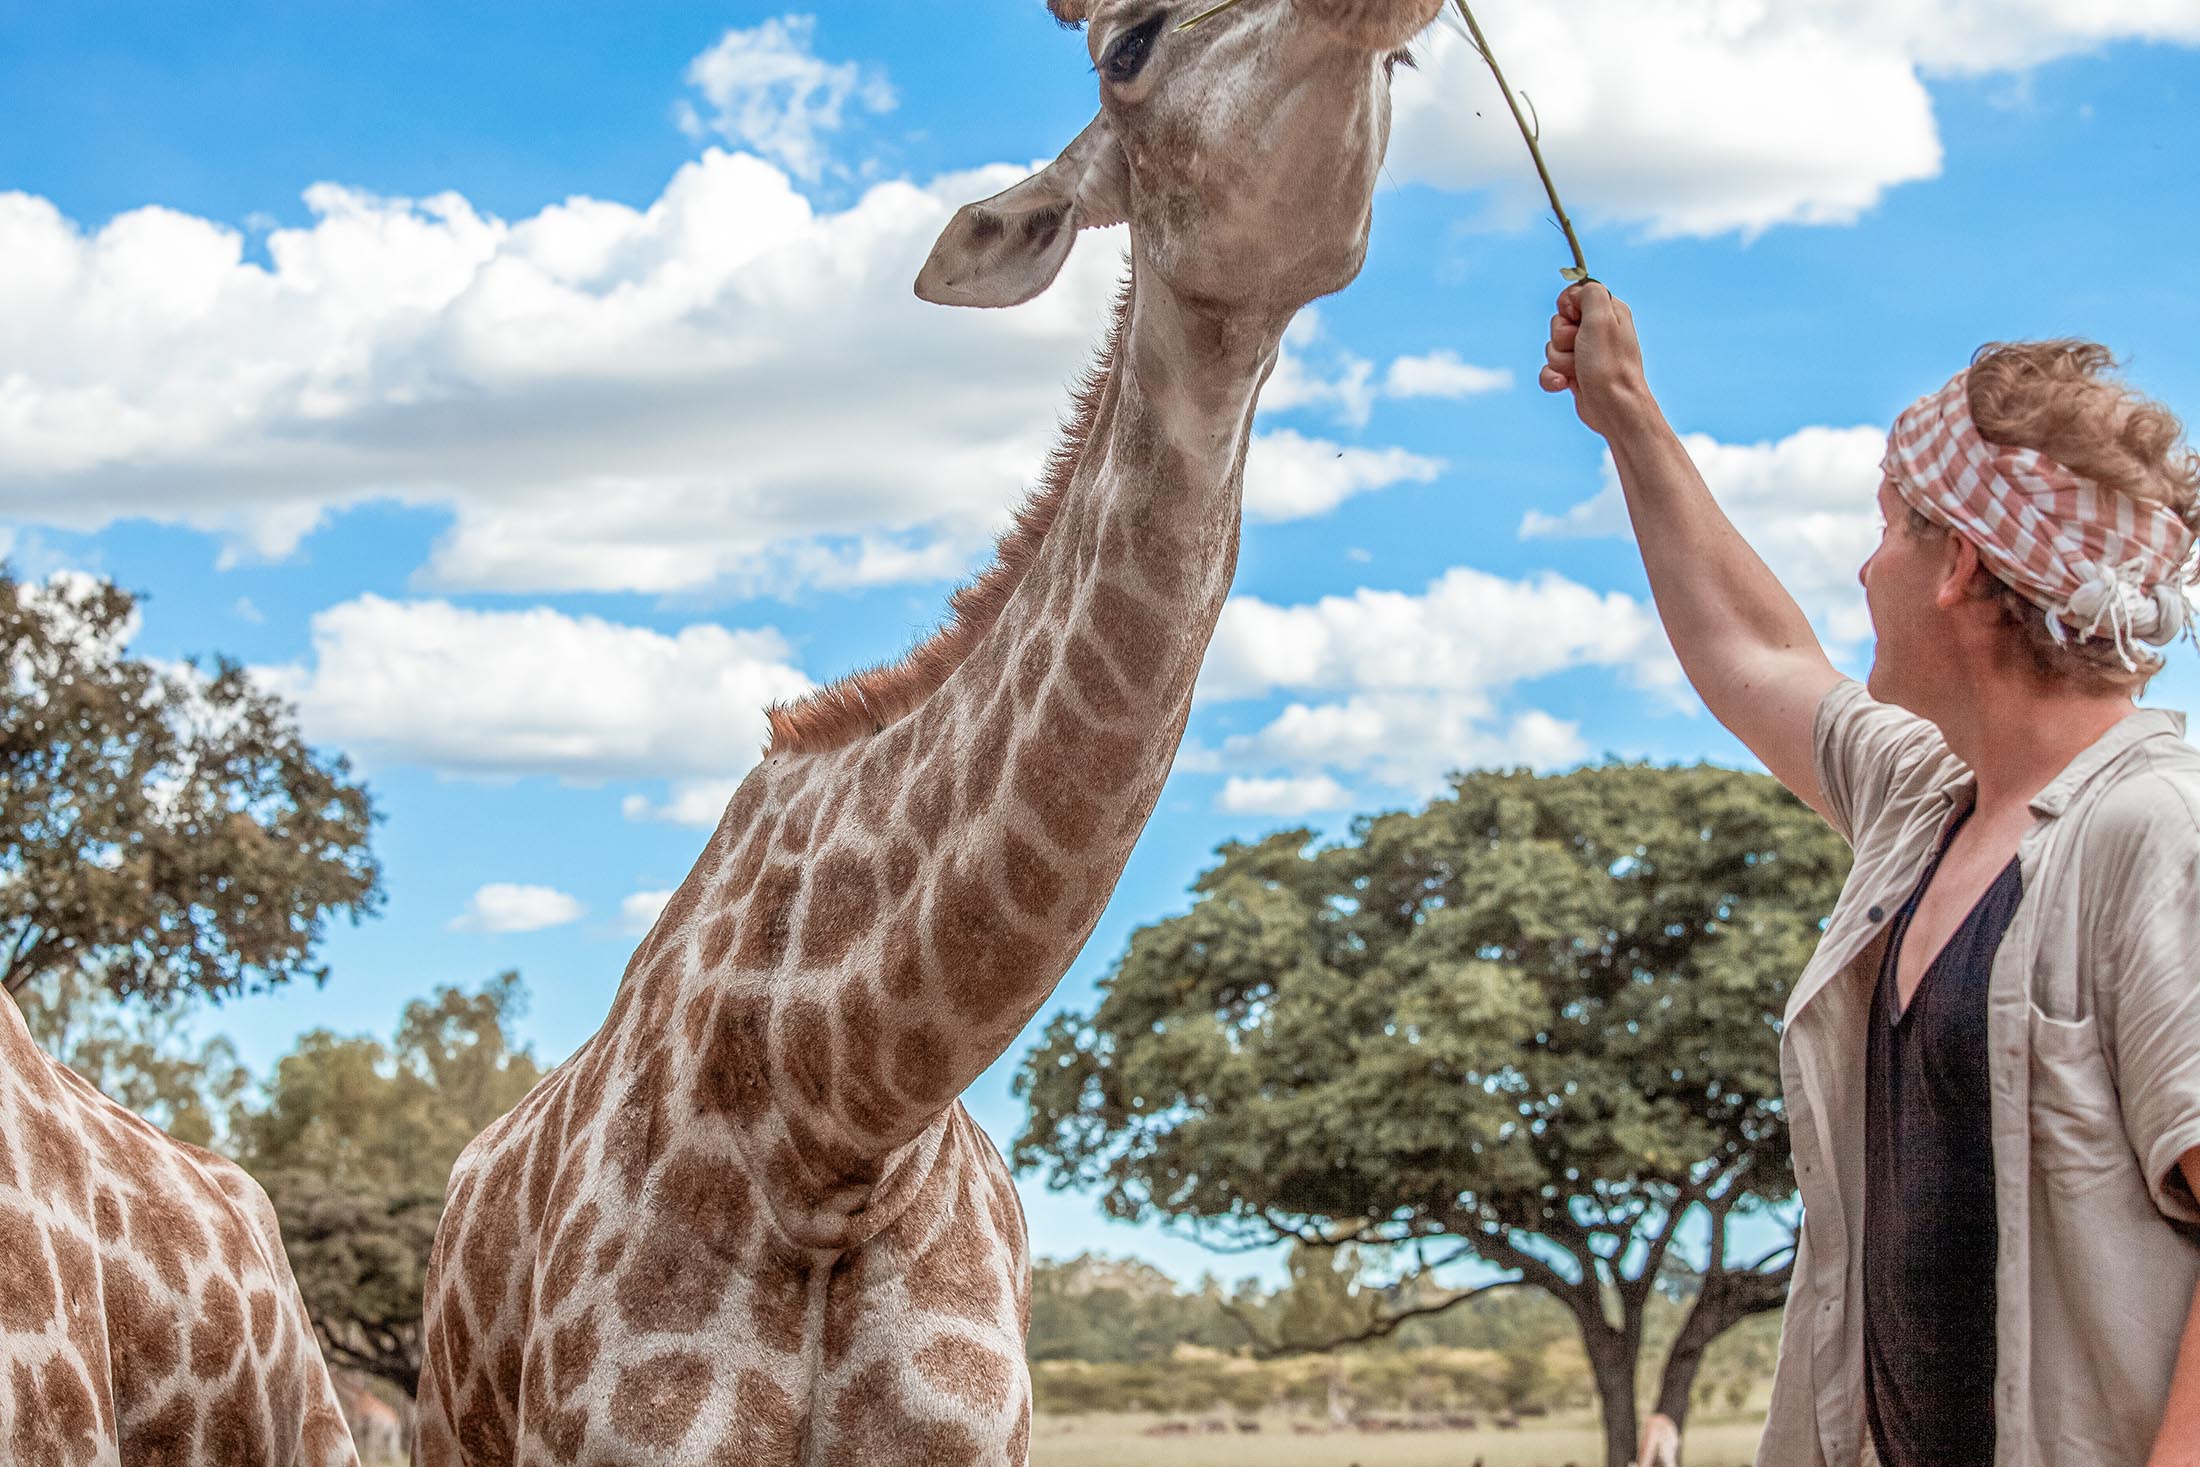 Ben feeding a giraffe at Wild is Life Harare Zimbabwe - post